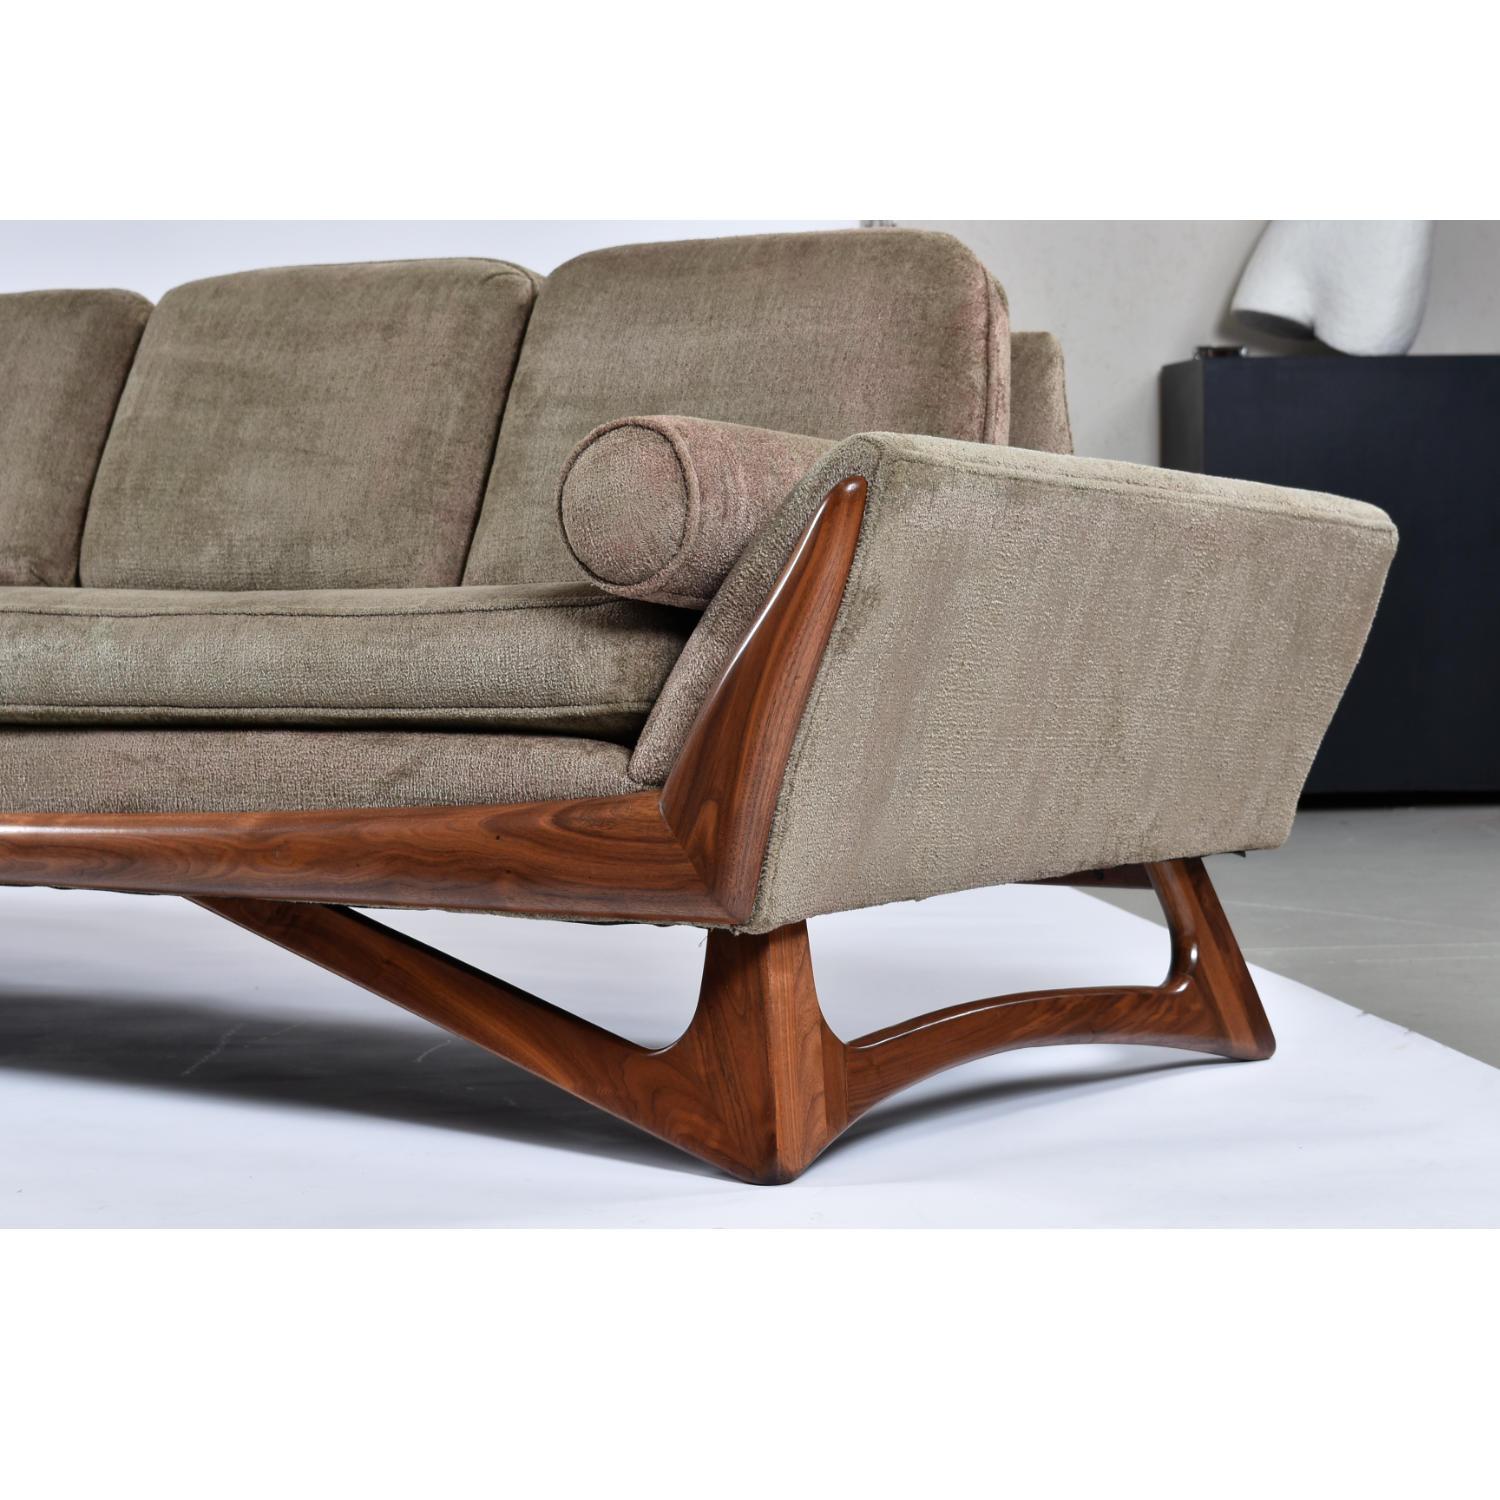 Upholstery Adrian Pearsall Style Four Seat Walnut Wood Trim Mid-Century Modern Sofa